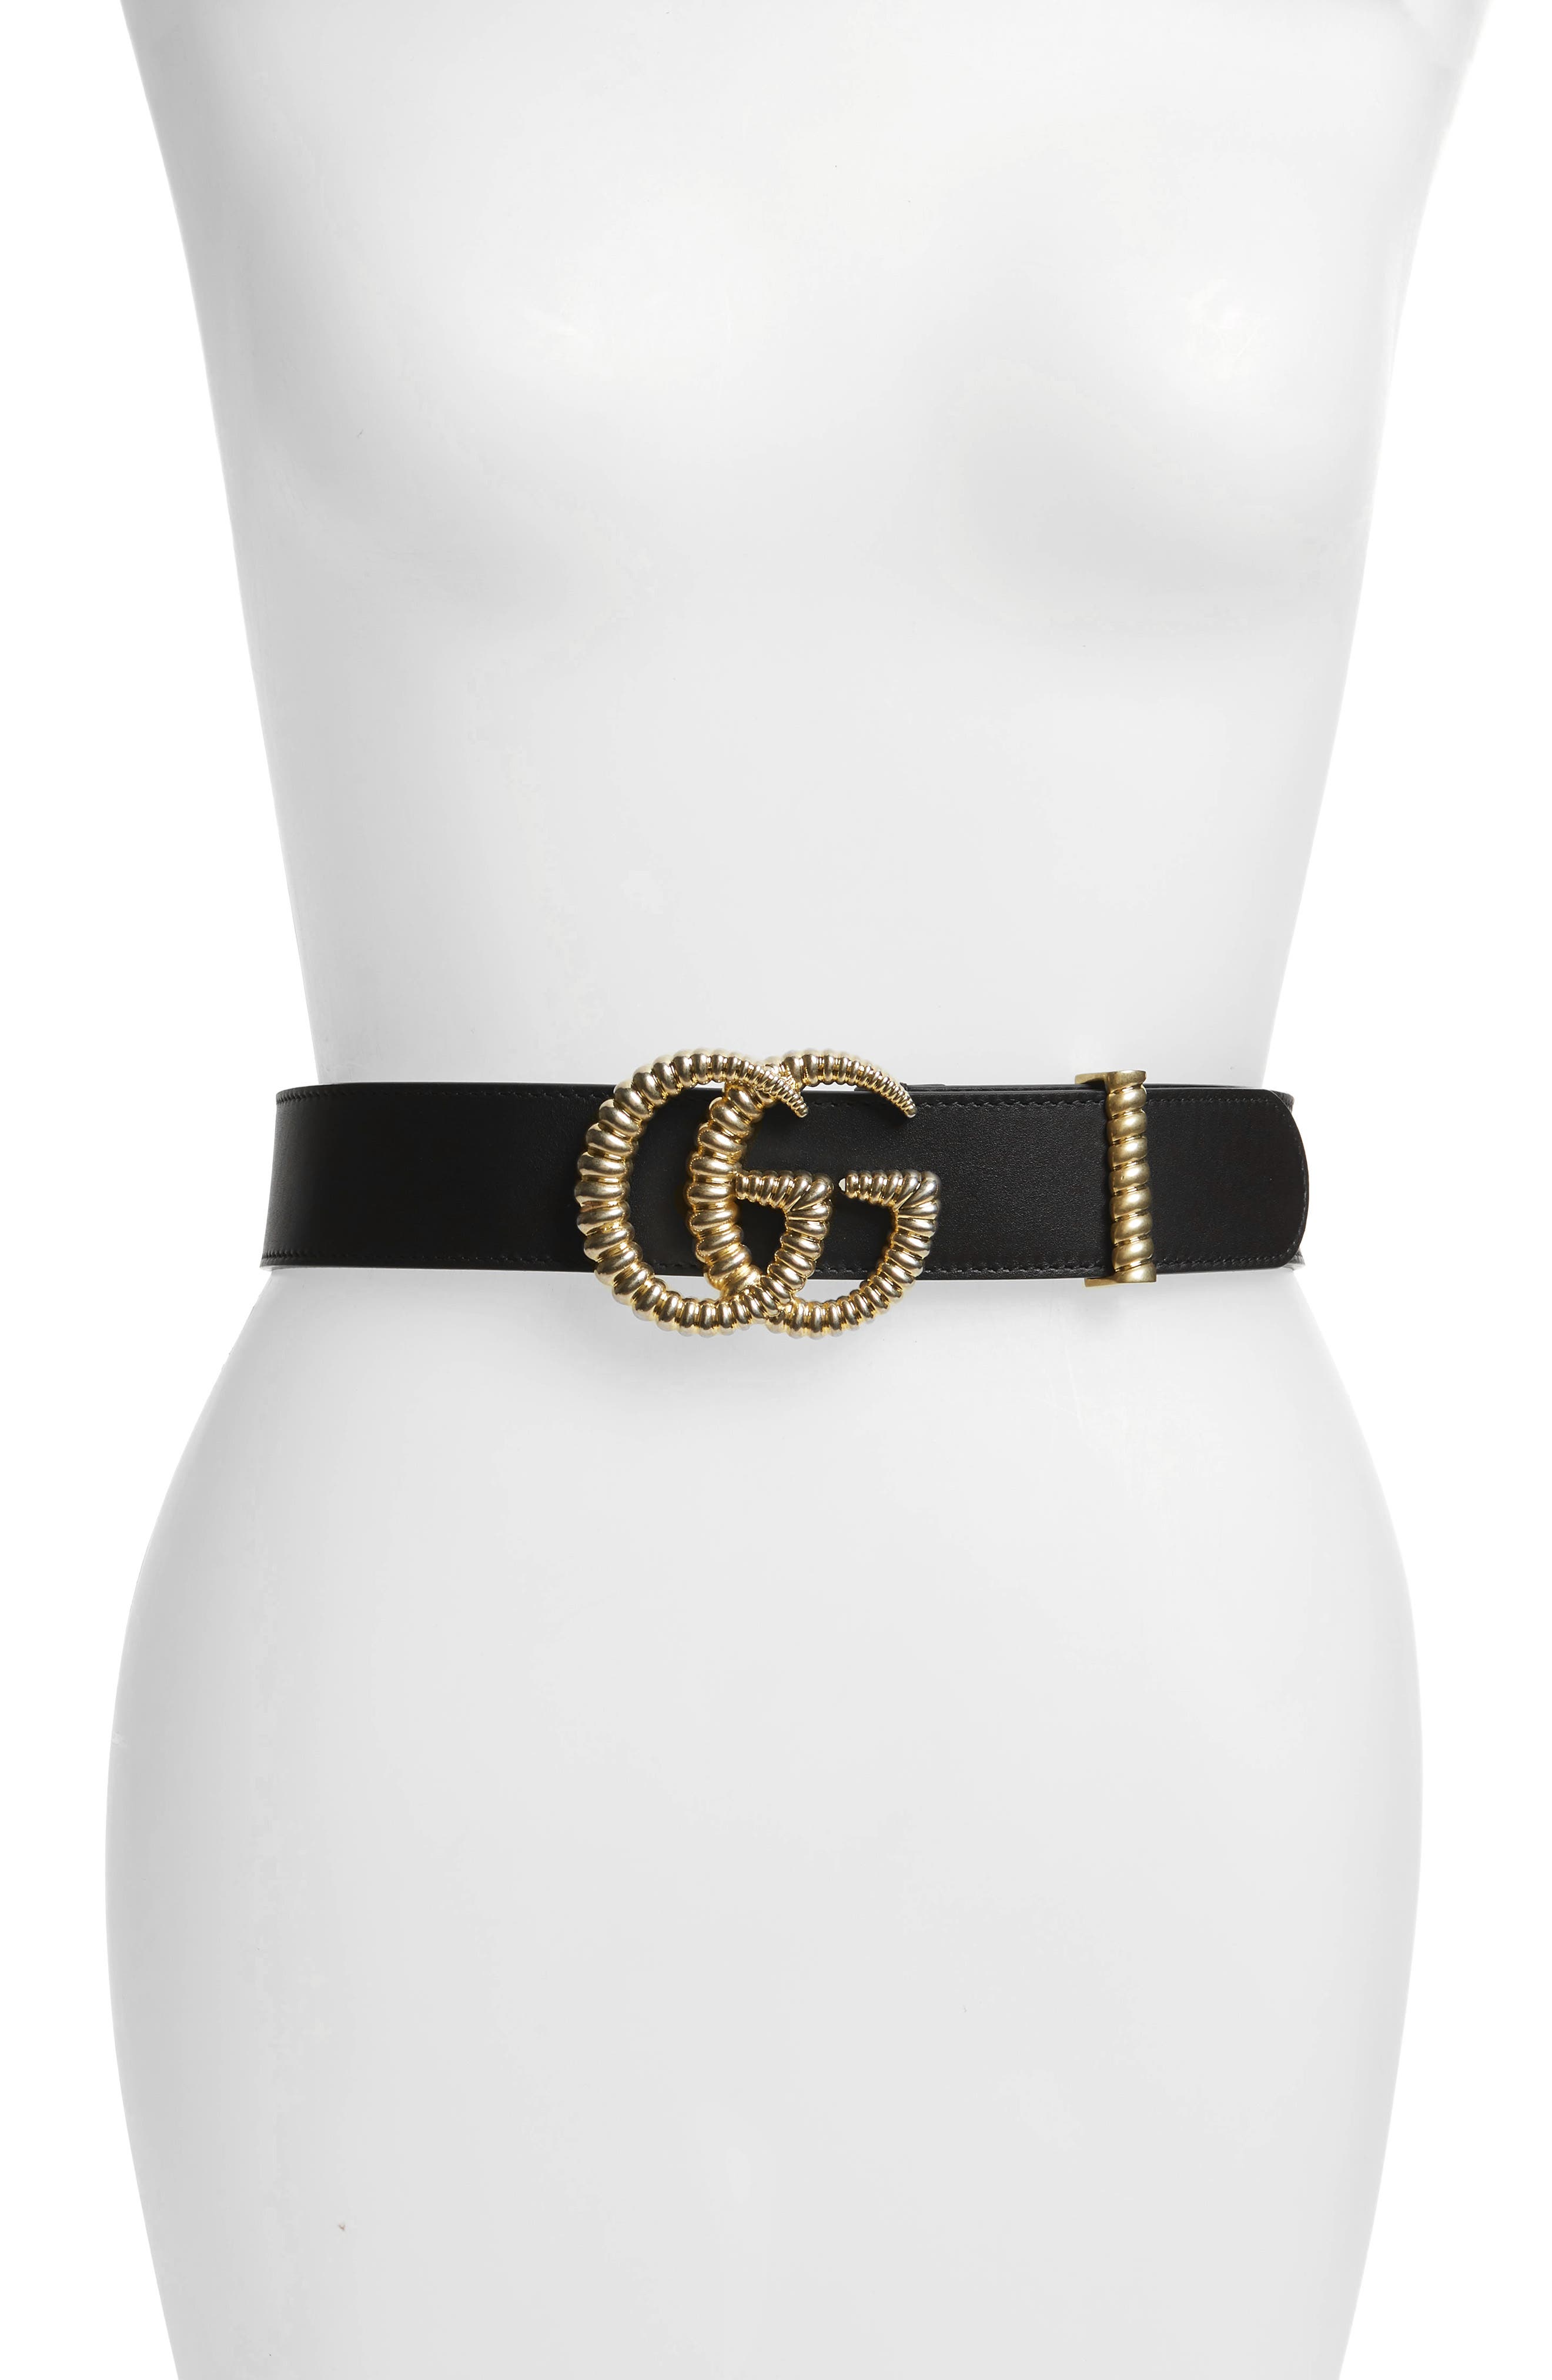 Gucci Textured GG Logo Leather Belt 